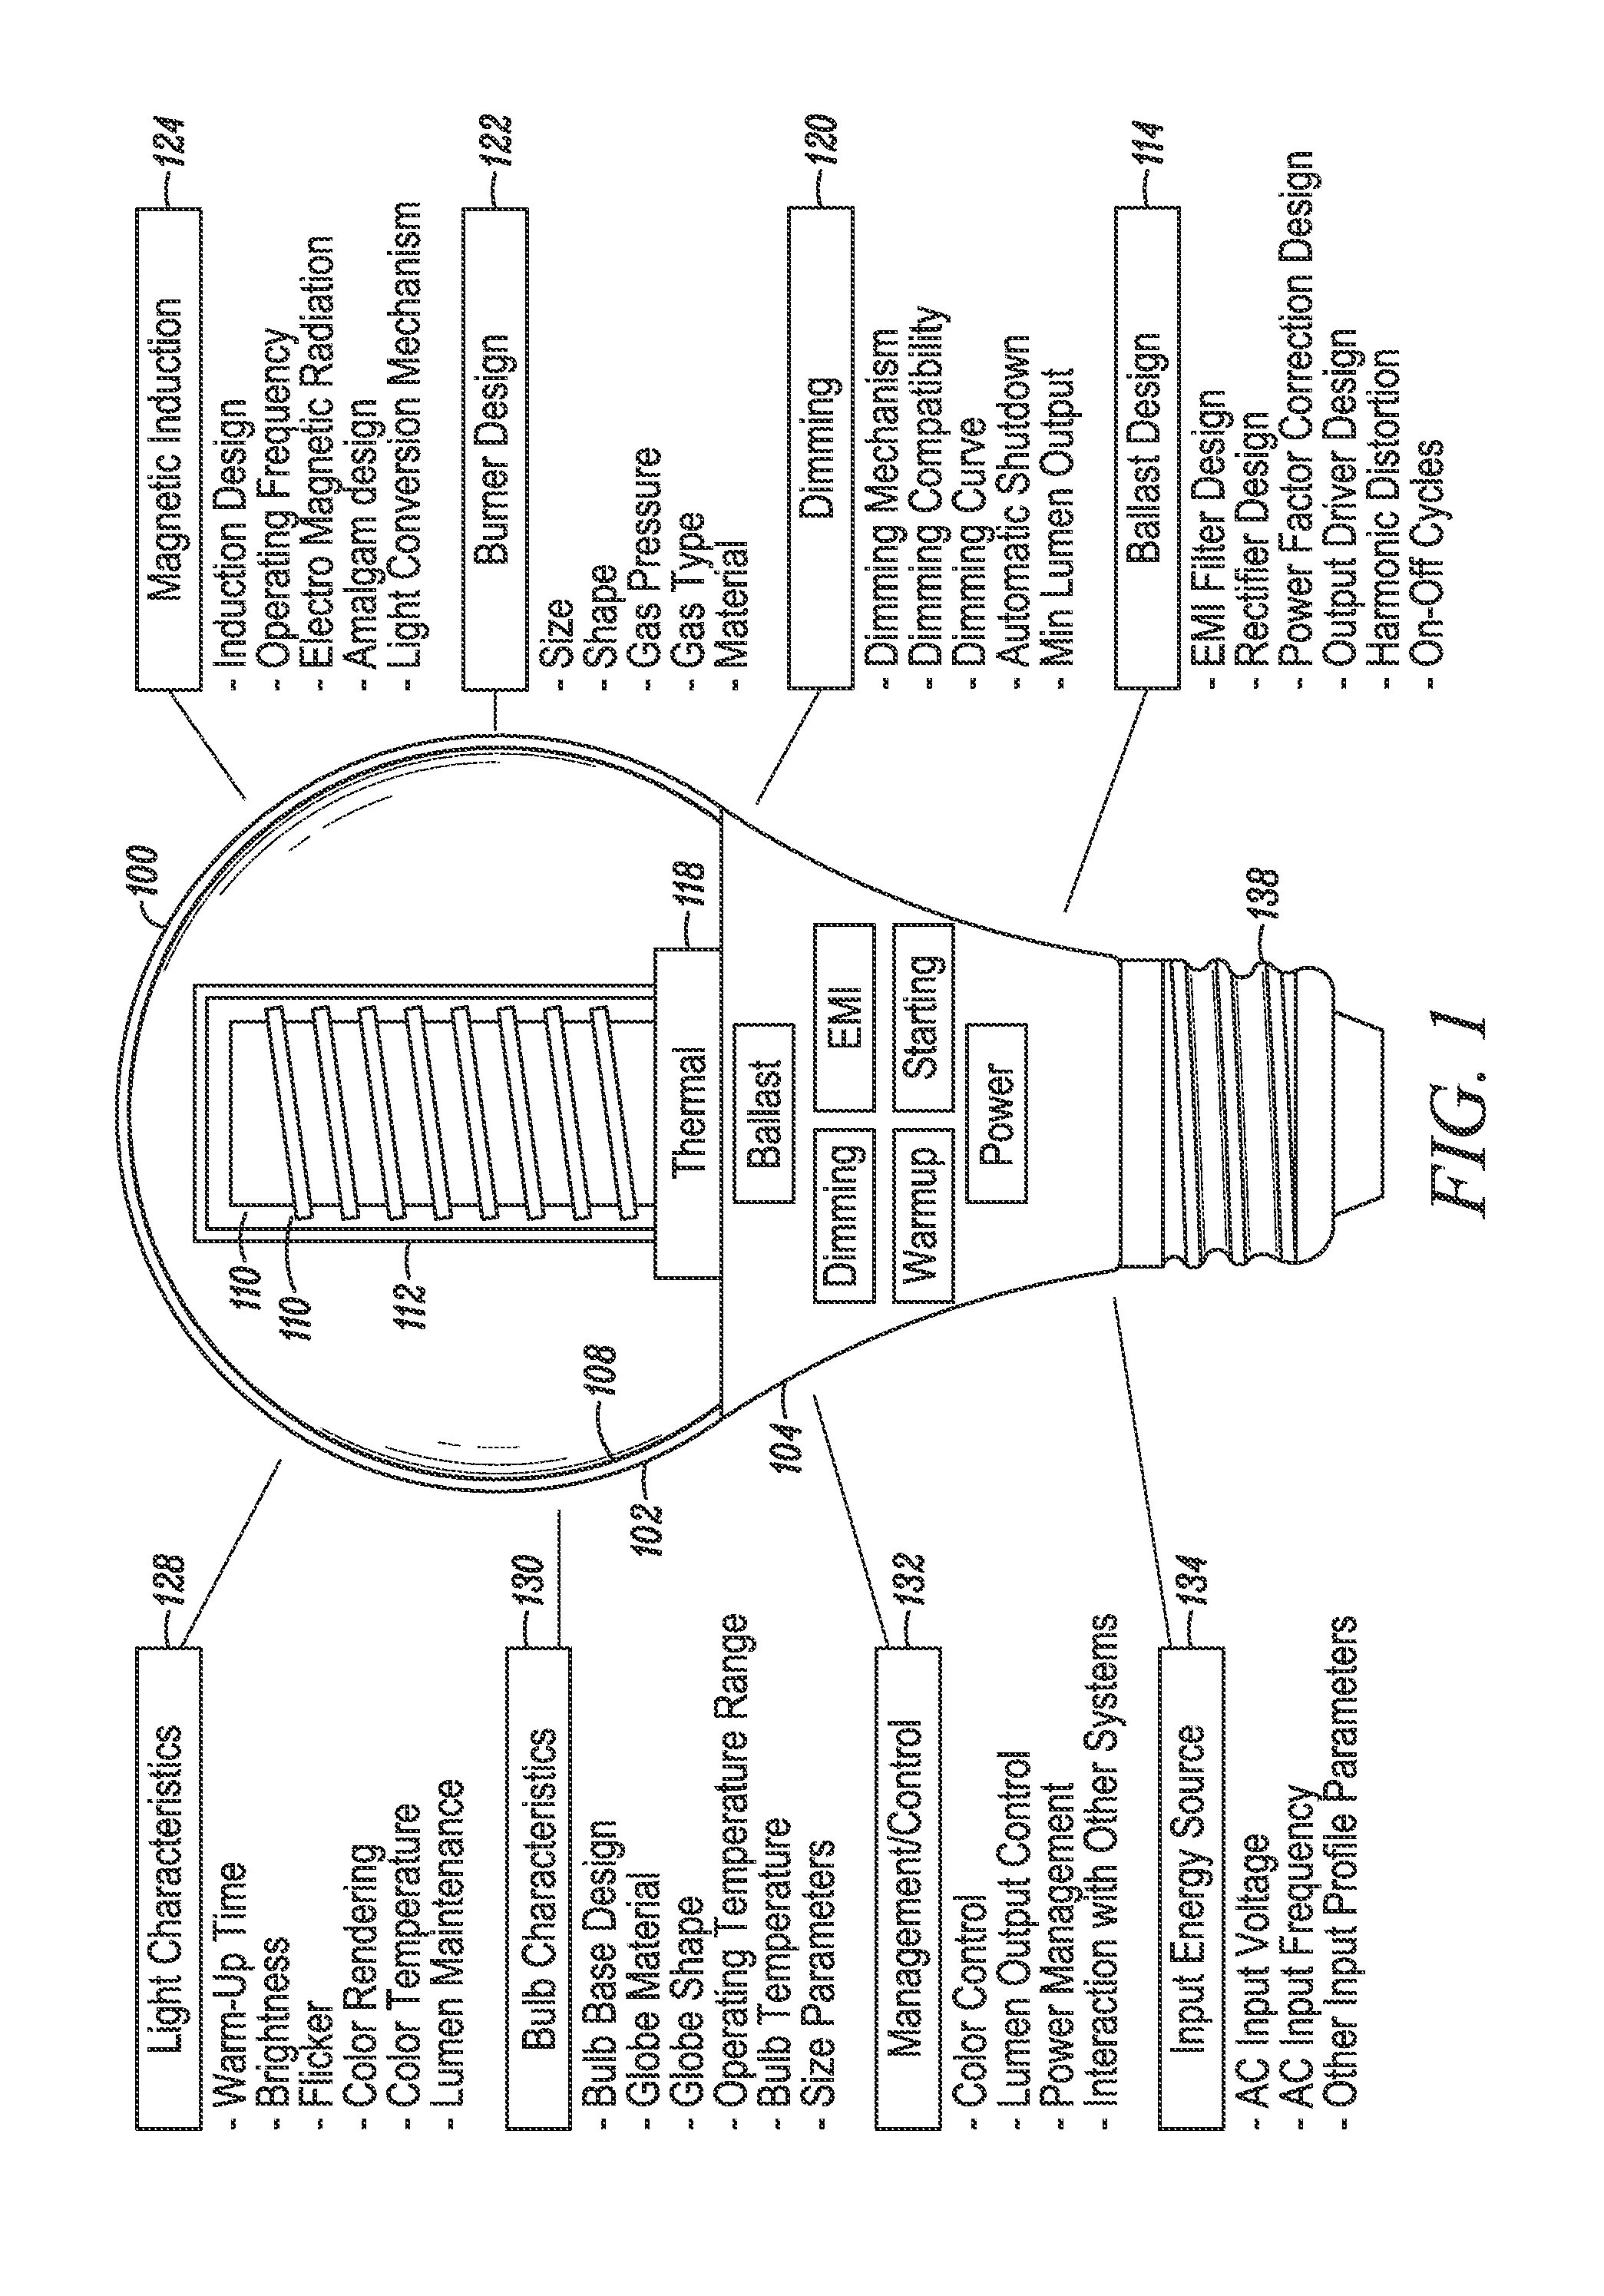 RF coupler stabilization in an induction RF fluorescent light bulb